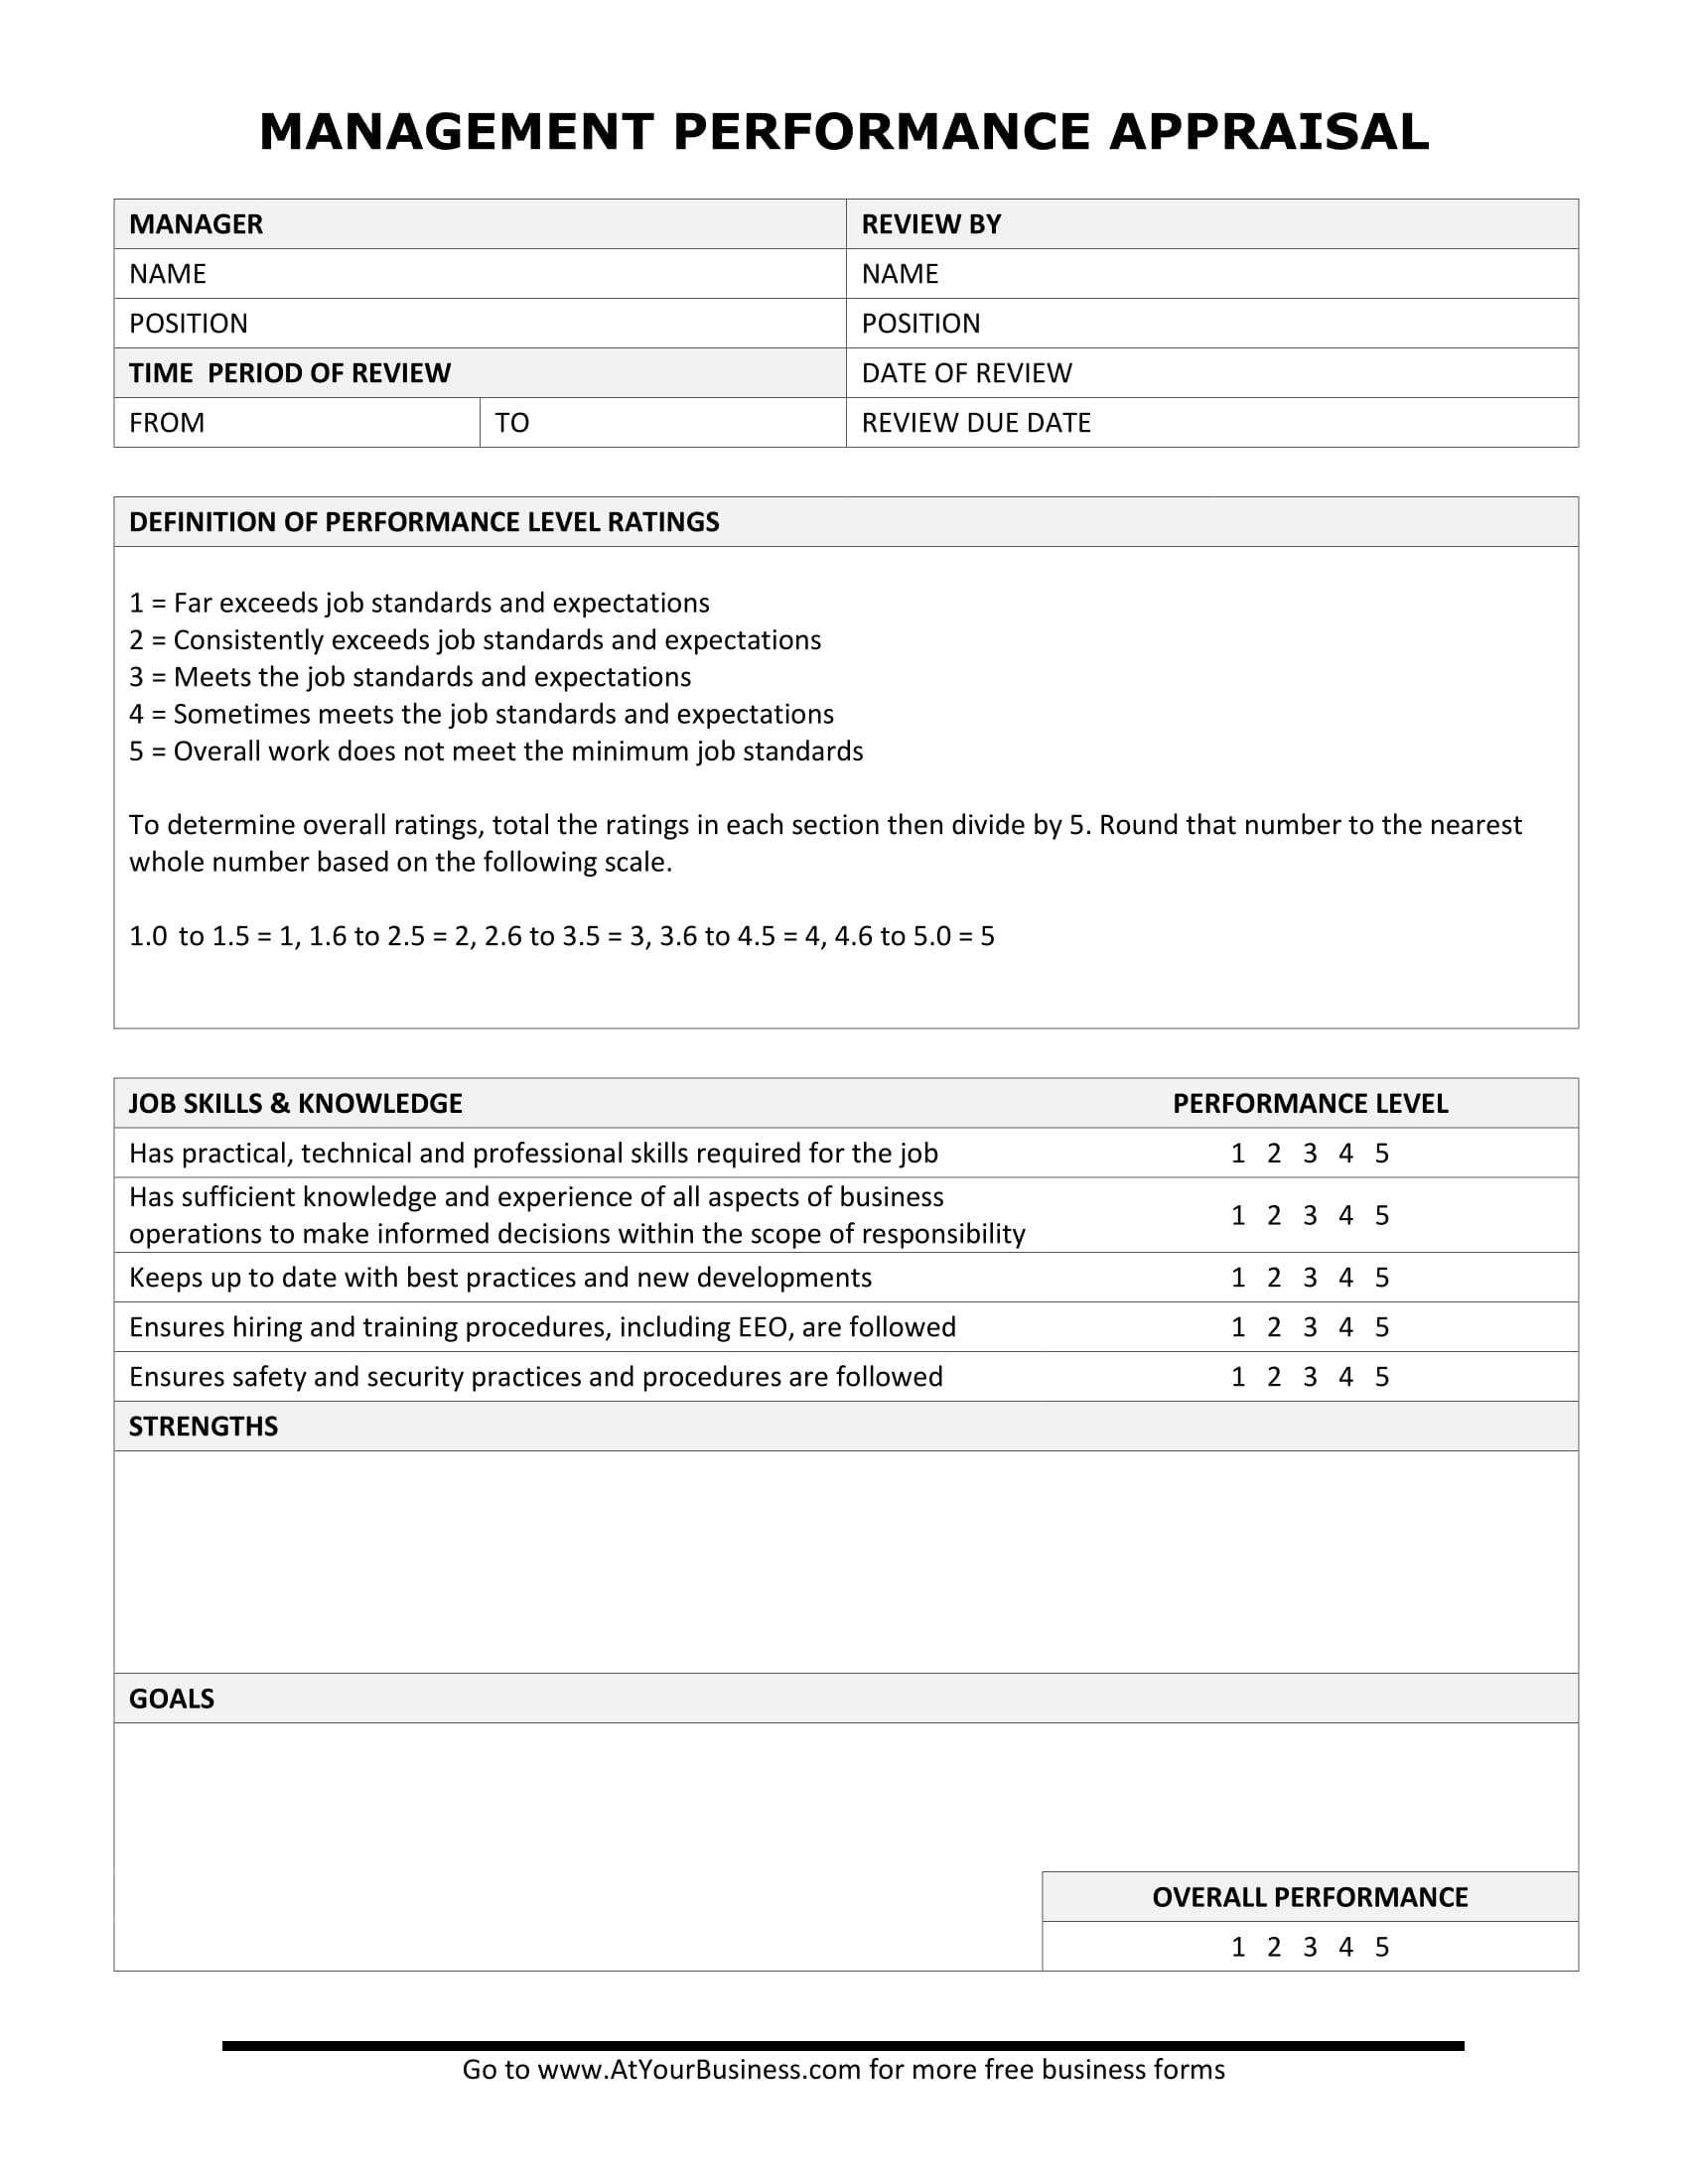 management performance appraisal form 1